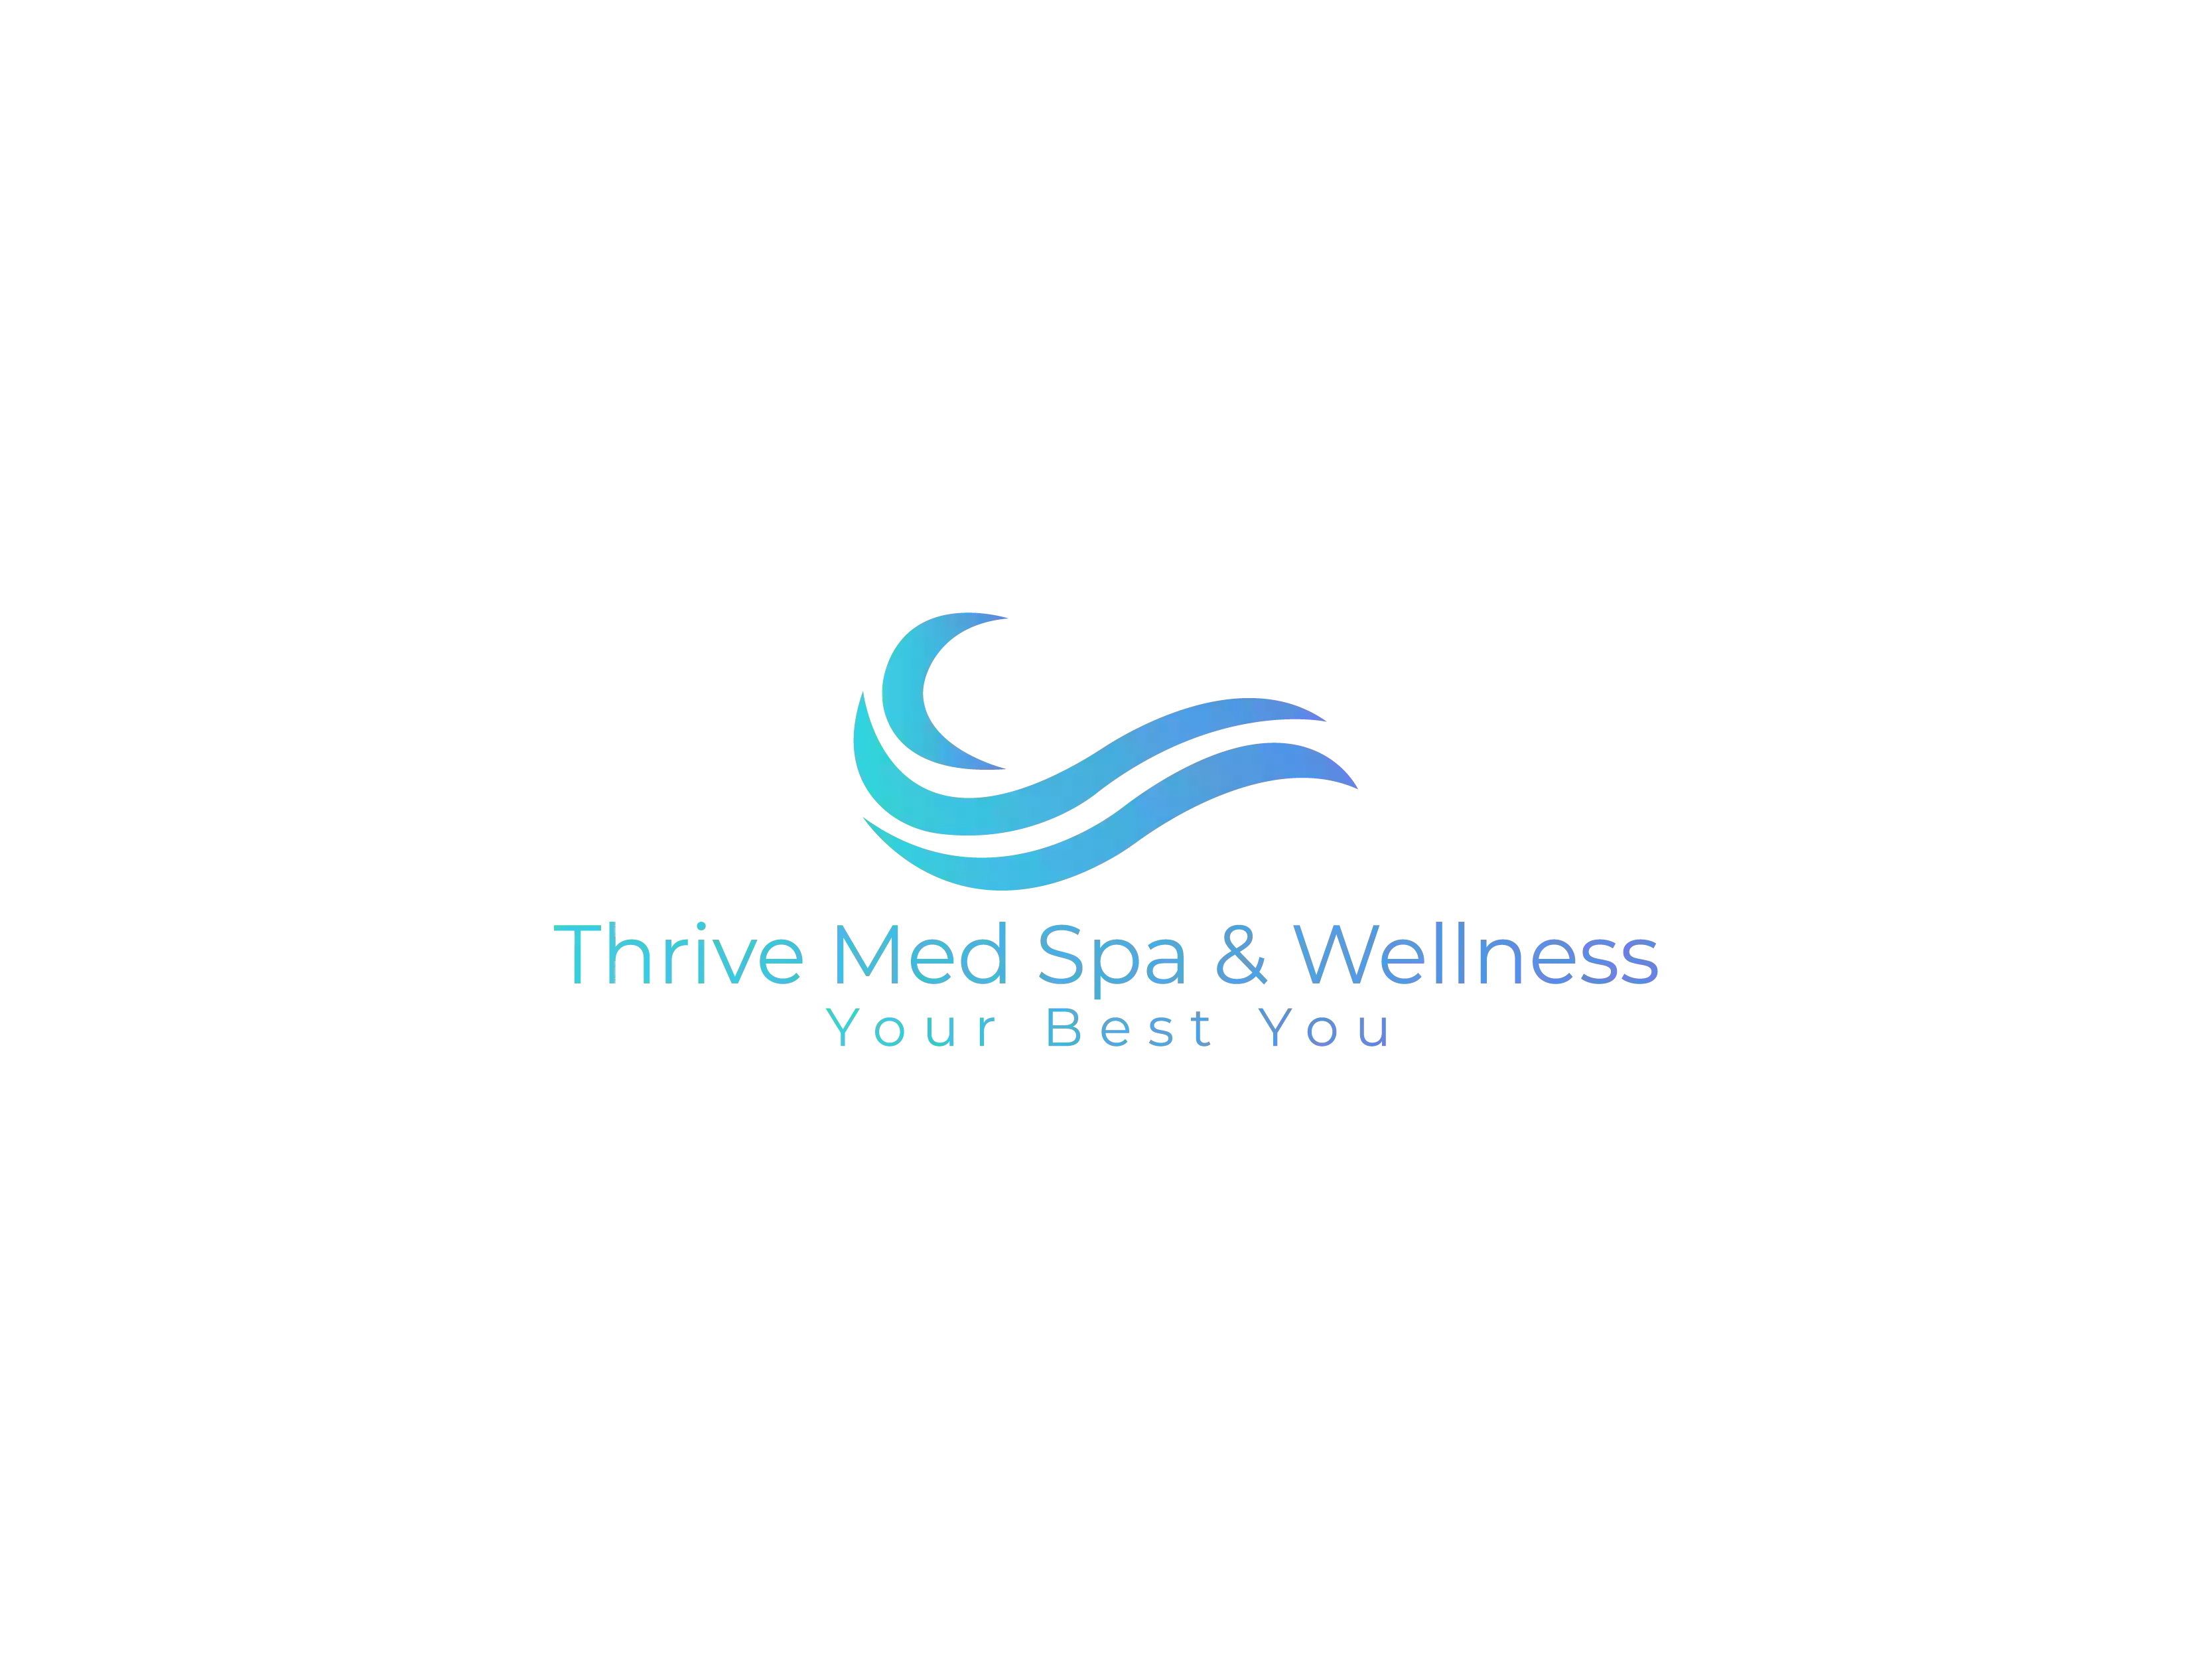 Thrive Med Spa & Wellness